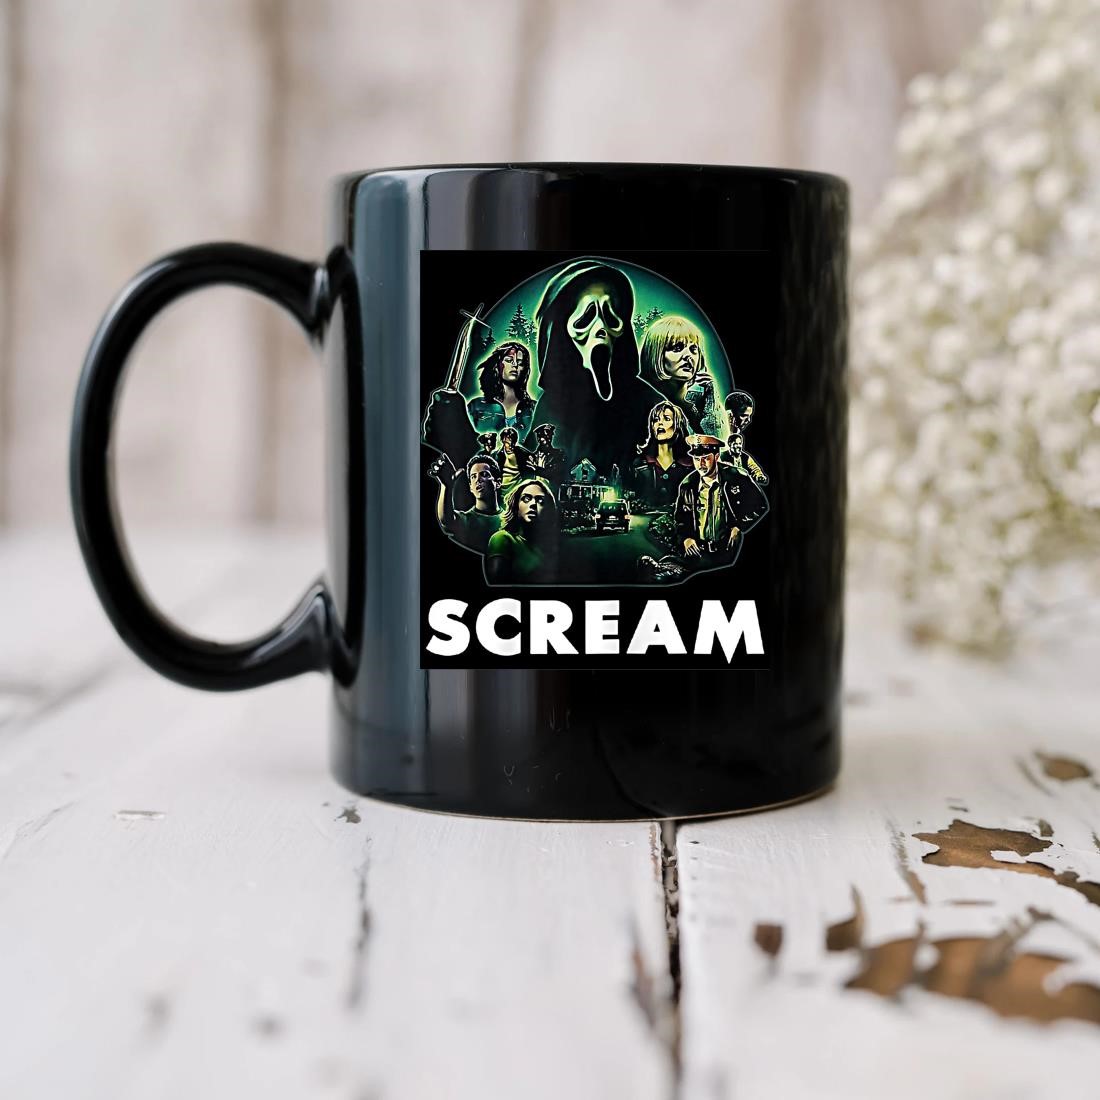 Original Scream Ghostface Creepy Halloween 80s Horror Movie Mug biu.jpg